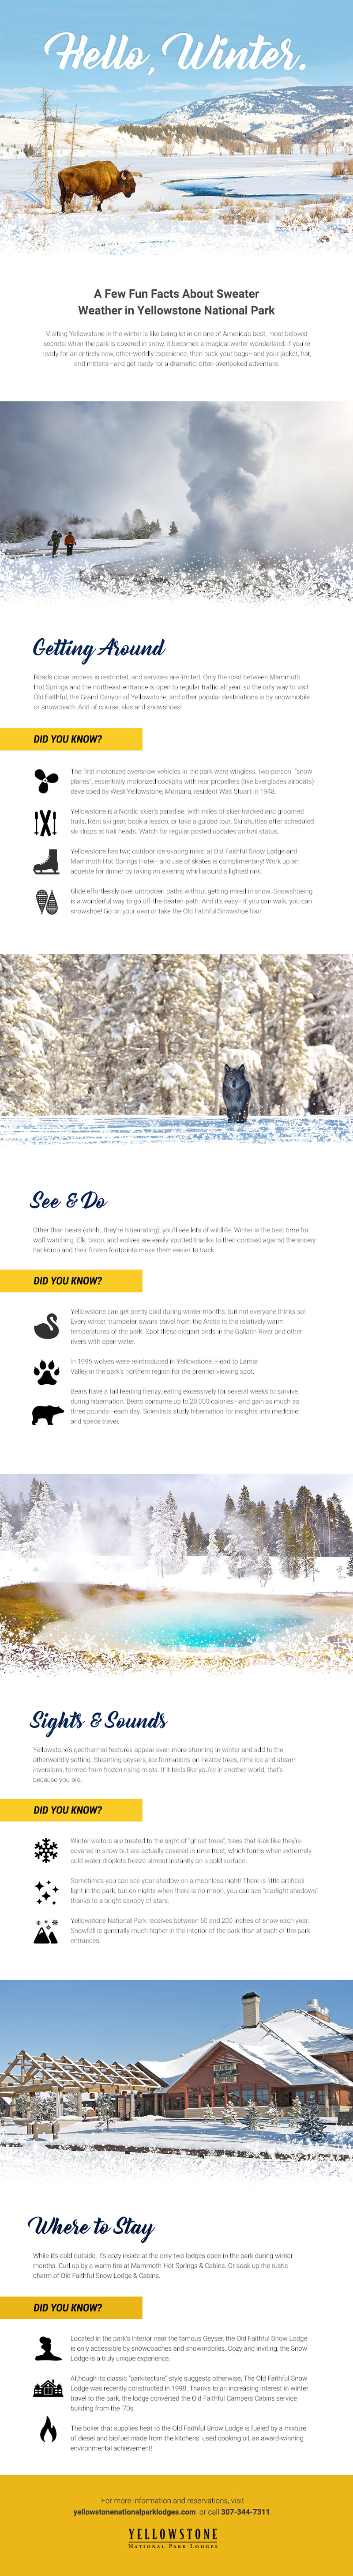 Yellowstone winter travel tips infographic